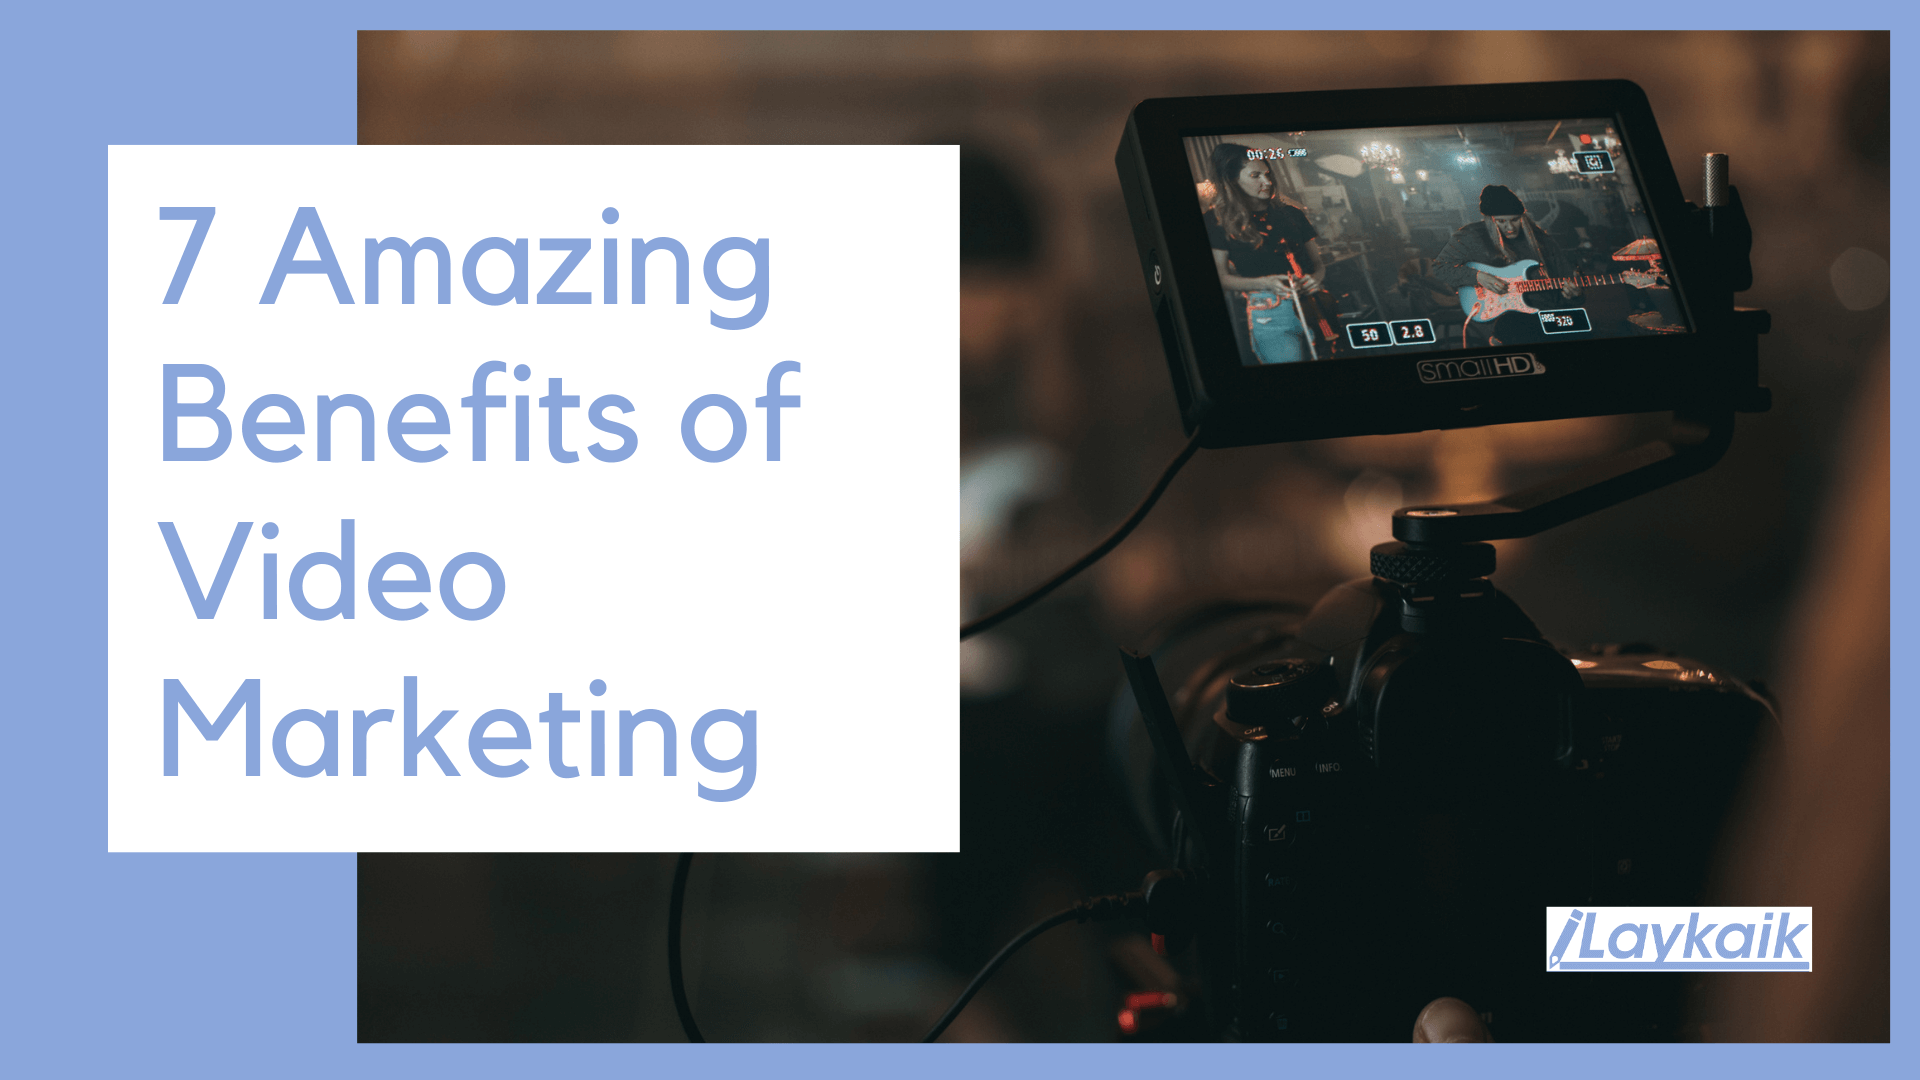 Benefits of Video Marketing